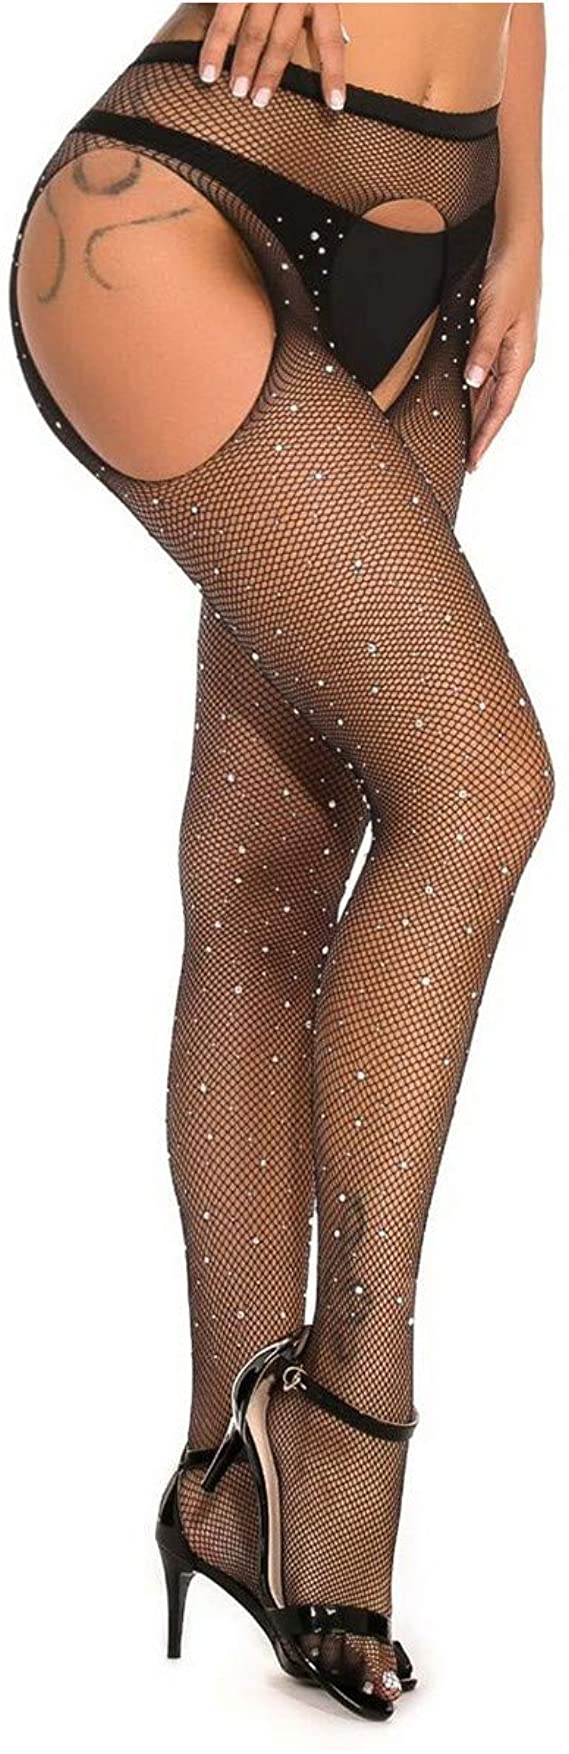 MengPa Fishnet Stockings Rhinestone High Waist Tights Pantyhose Sheer for Women